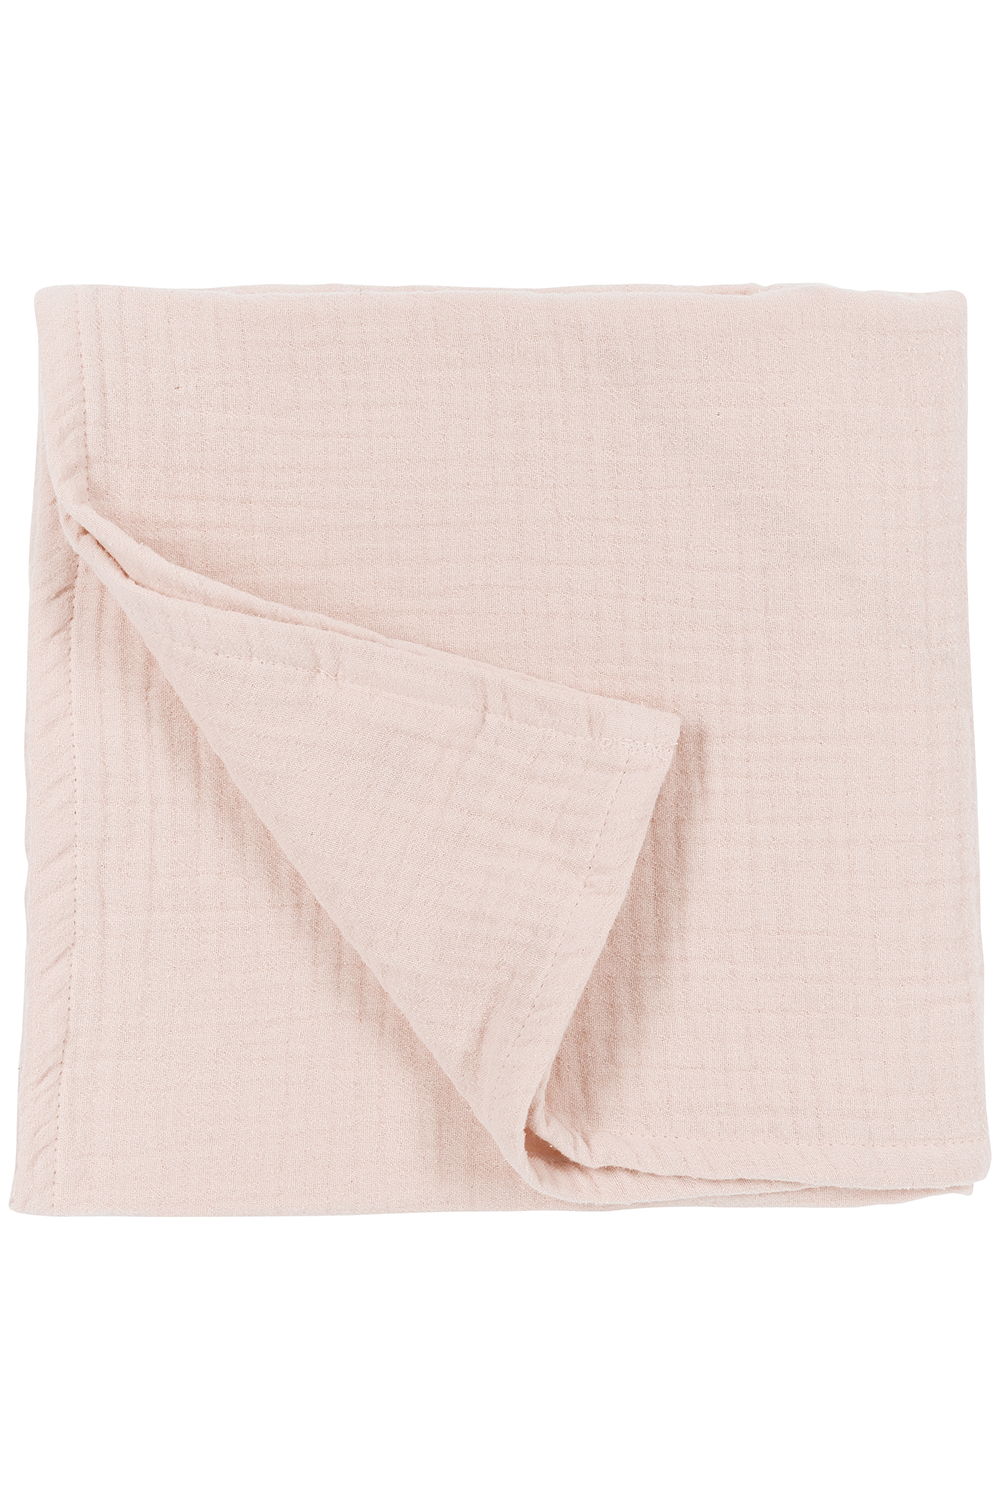 Blanket muslin Uni - soft pink - 140x200cm